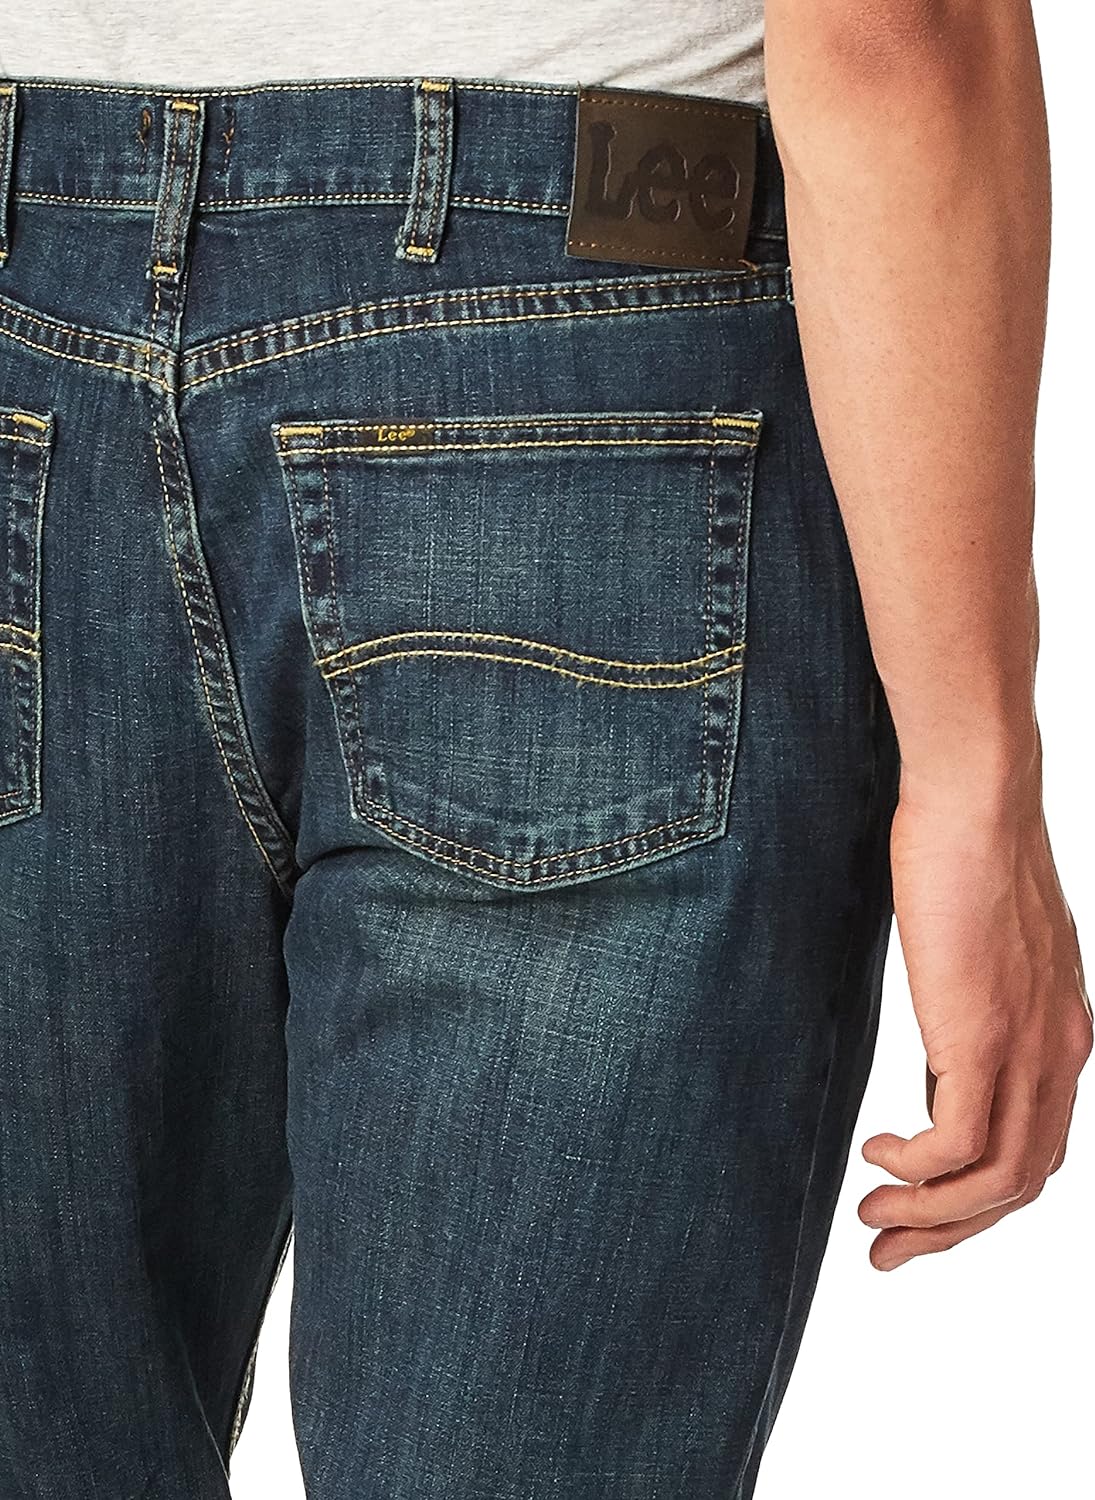 LEE Men's Premium Select Classic-Fit Straight-Leg Jean